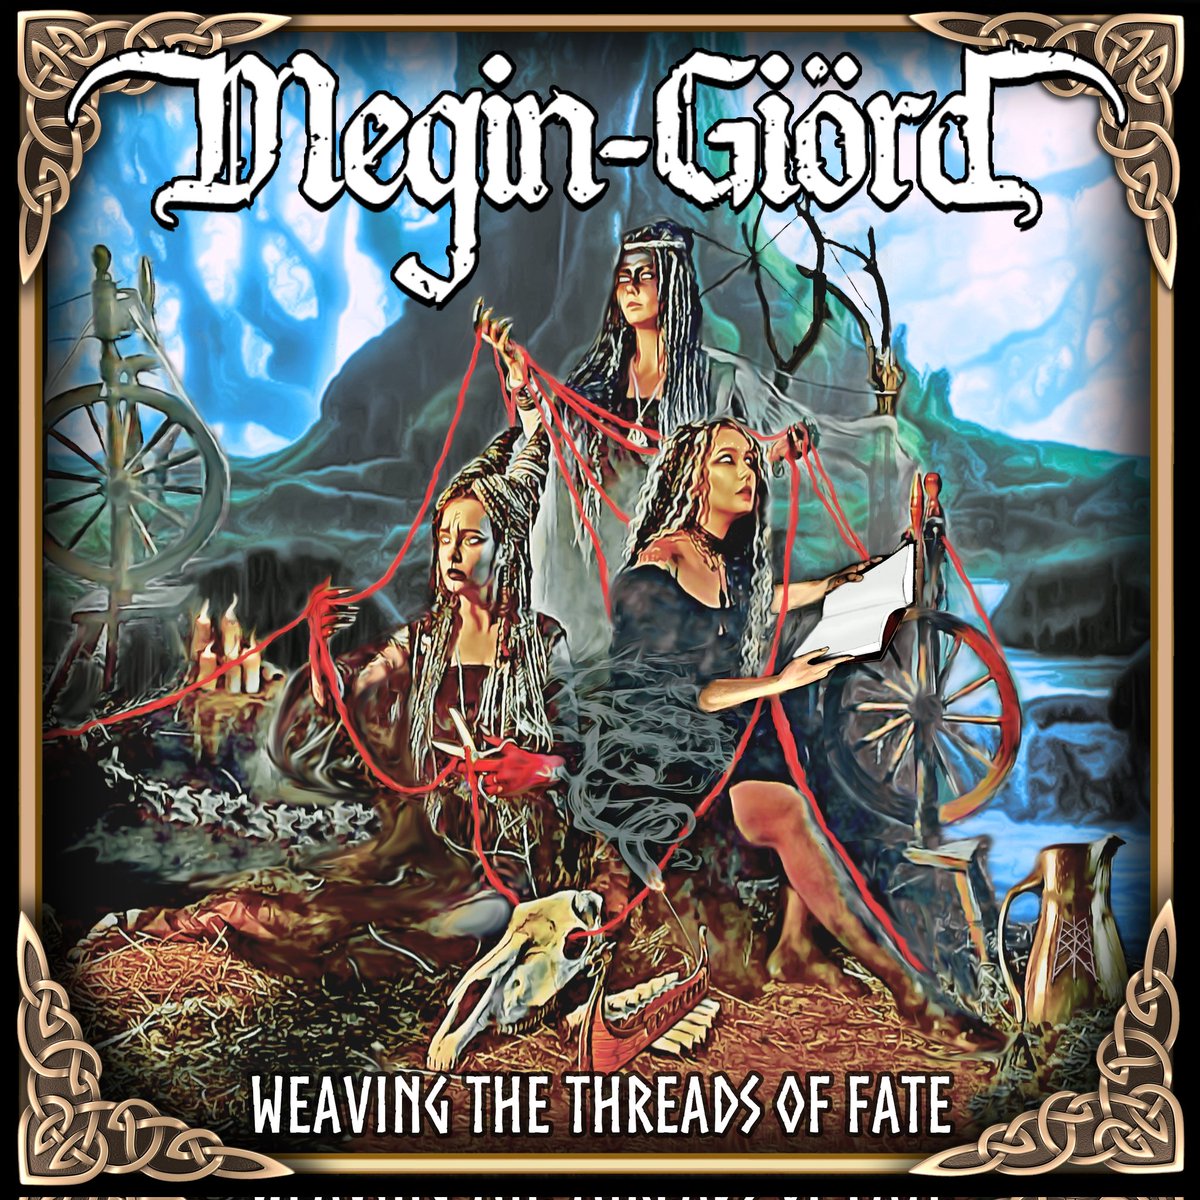 Weaving The Threads Of Fate
#MeginGiörd #MeginGiord #Megin_Giord #Megin_Giörd
#WeavingTheThreadsOfFate
#GothicMetal #MelodicMetal
open.spotify.com/artist/2ZUOzYx…